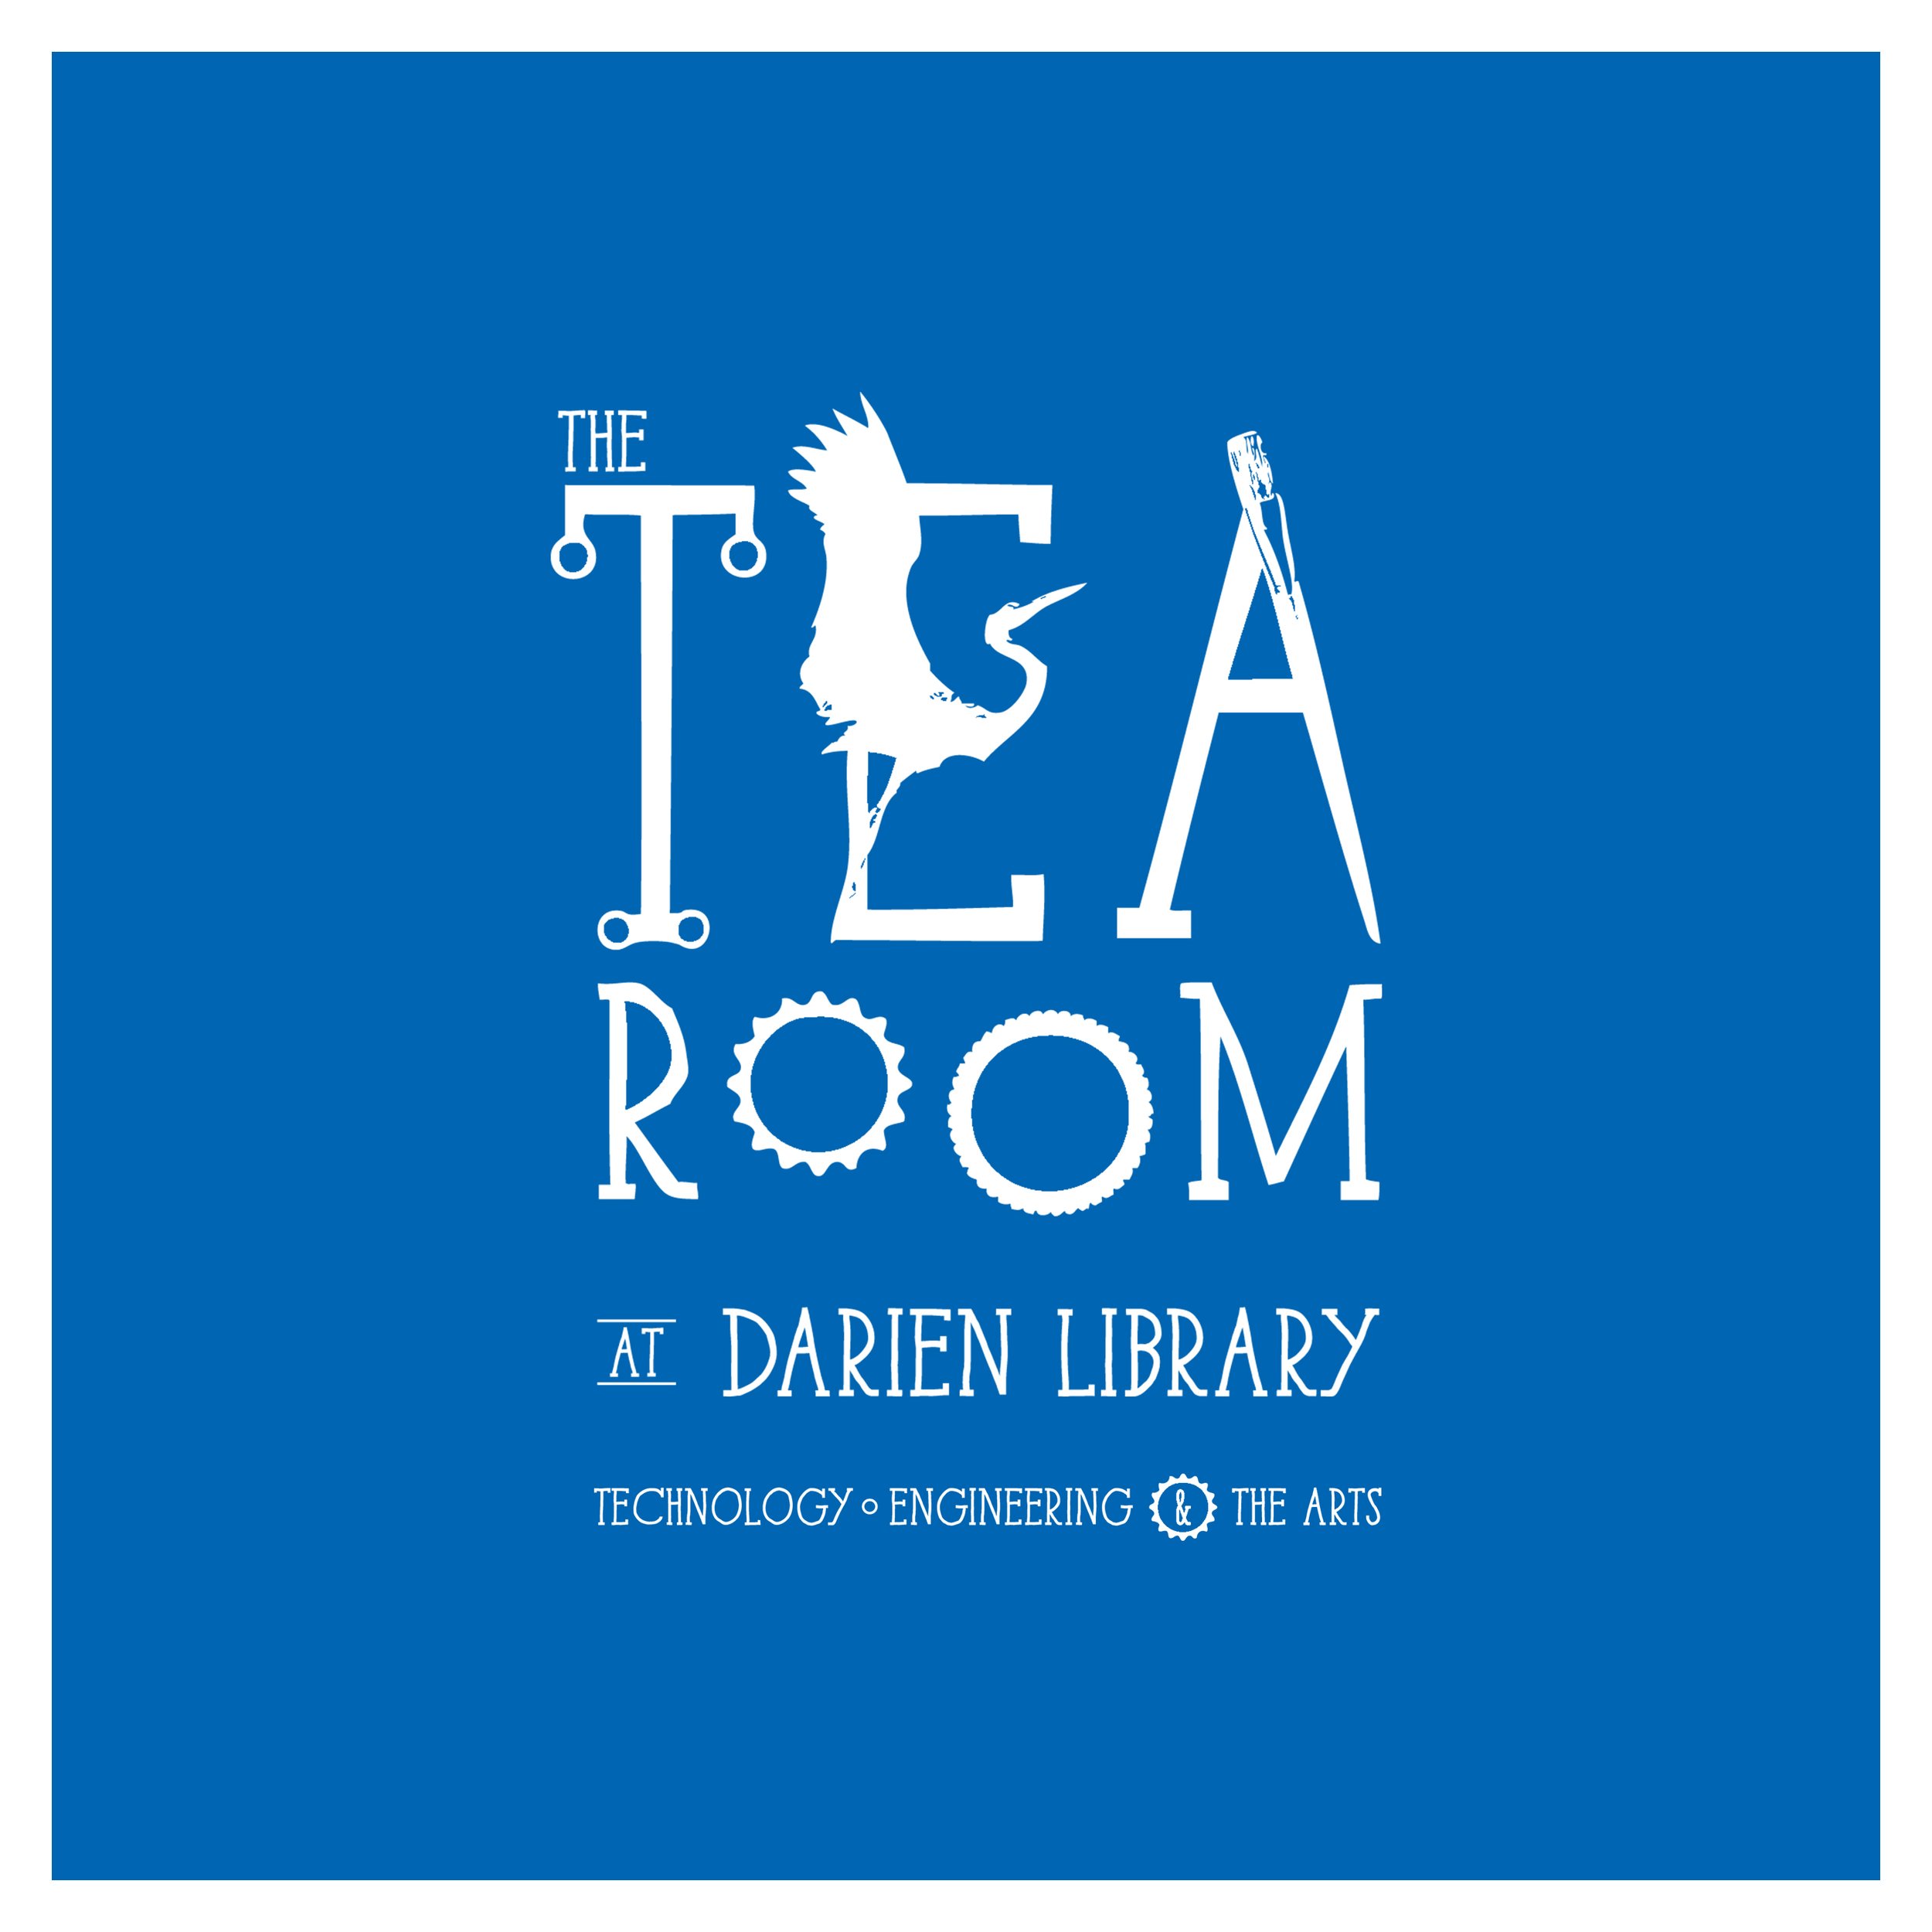 Darien Library / The Tea Room / Logo